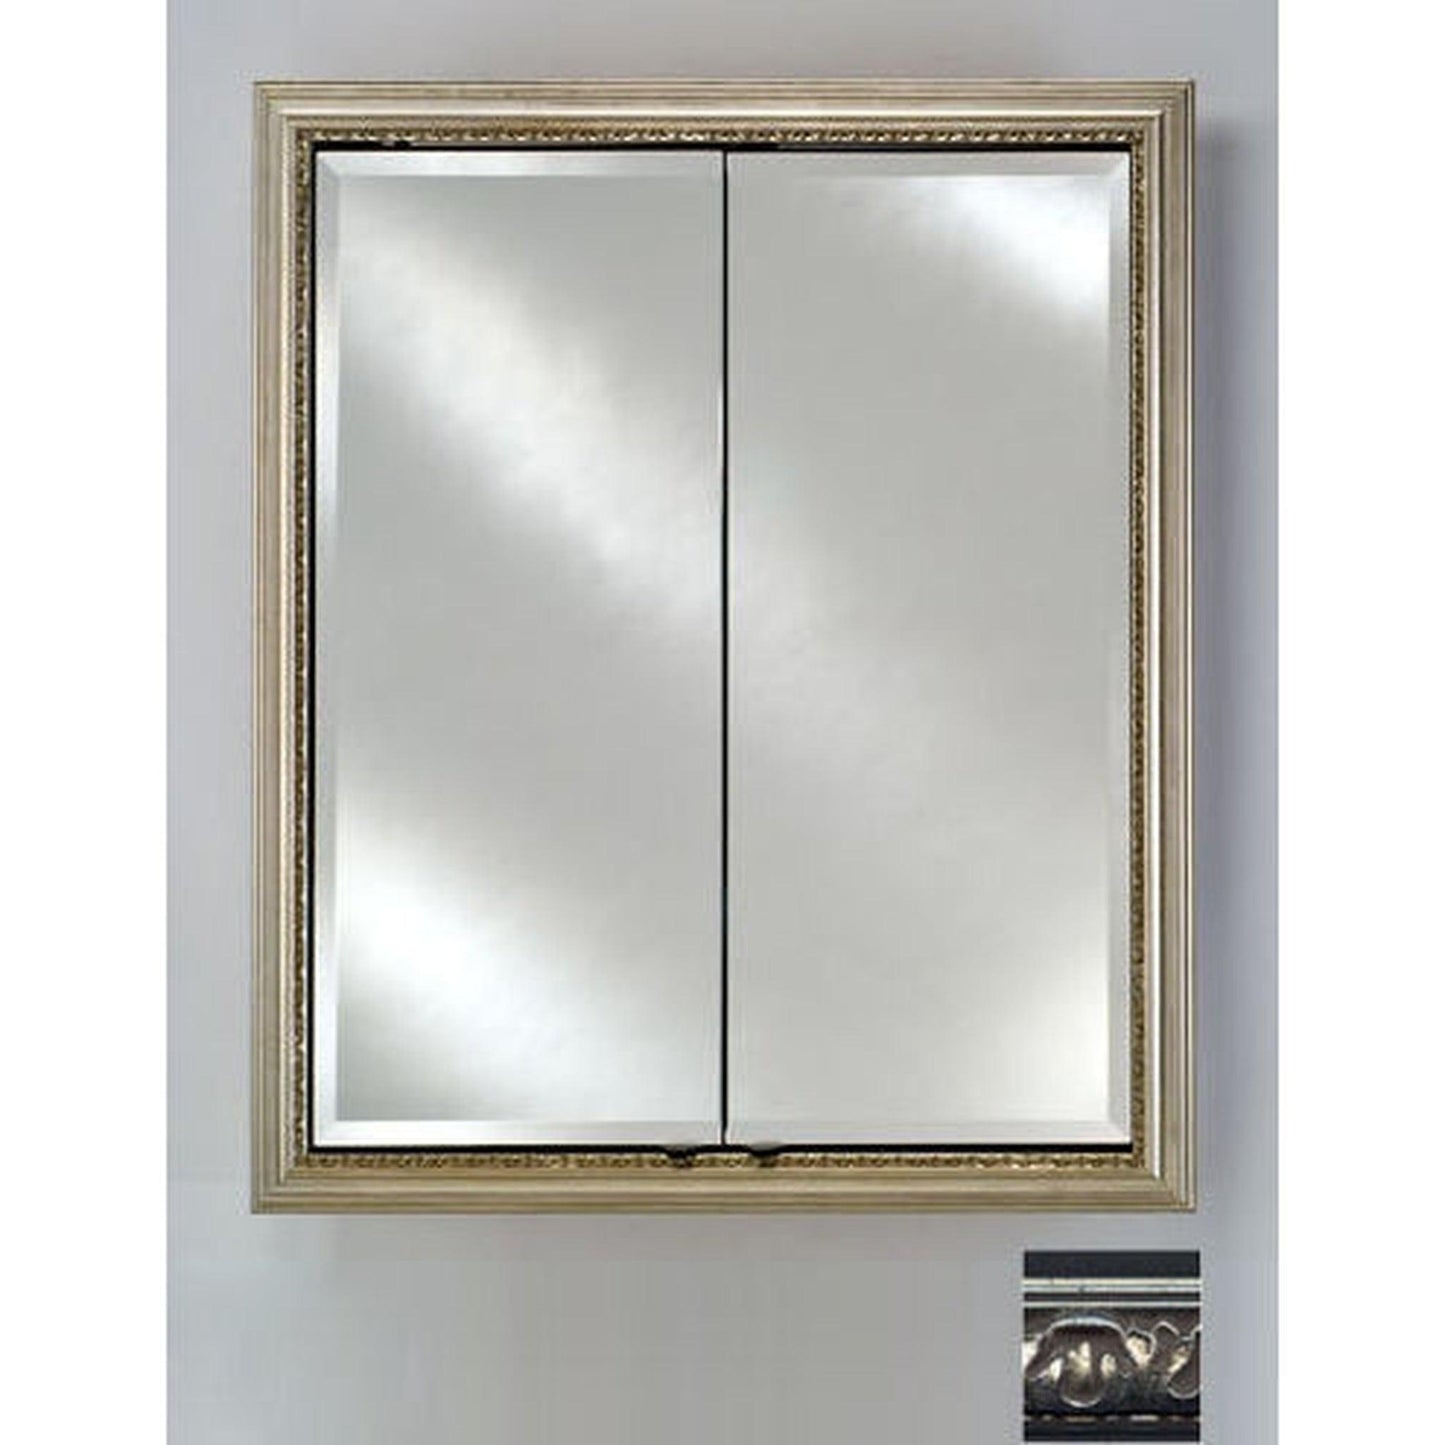 Afina Signature 24" x 30" Valencia Antique Silver Recessed Double Door Medicine Cabinet With Beveled Edge Mirror